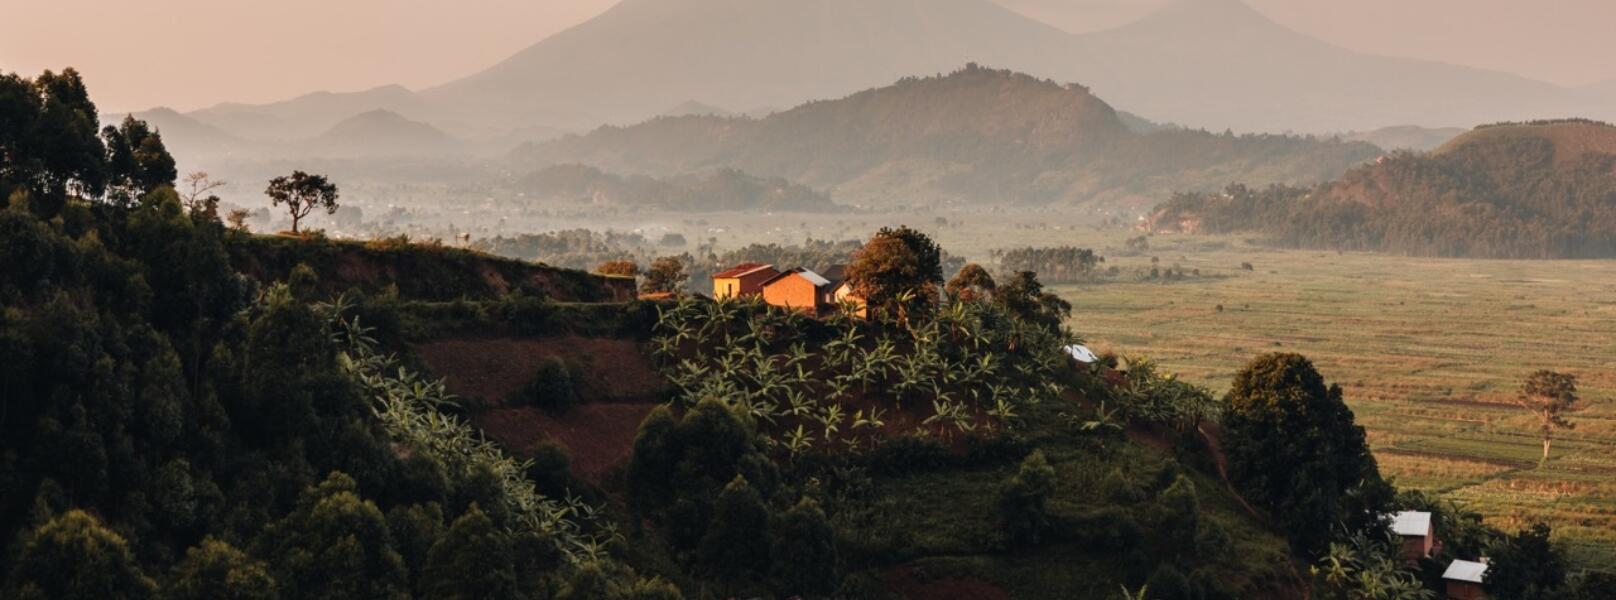 Cultuur & natuur reis Oeganda